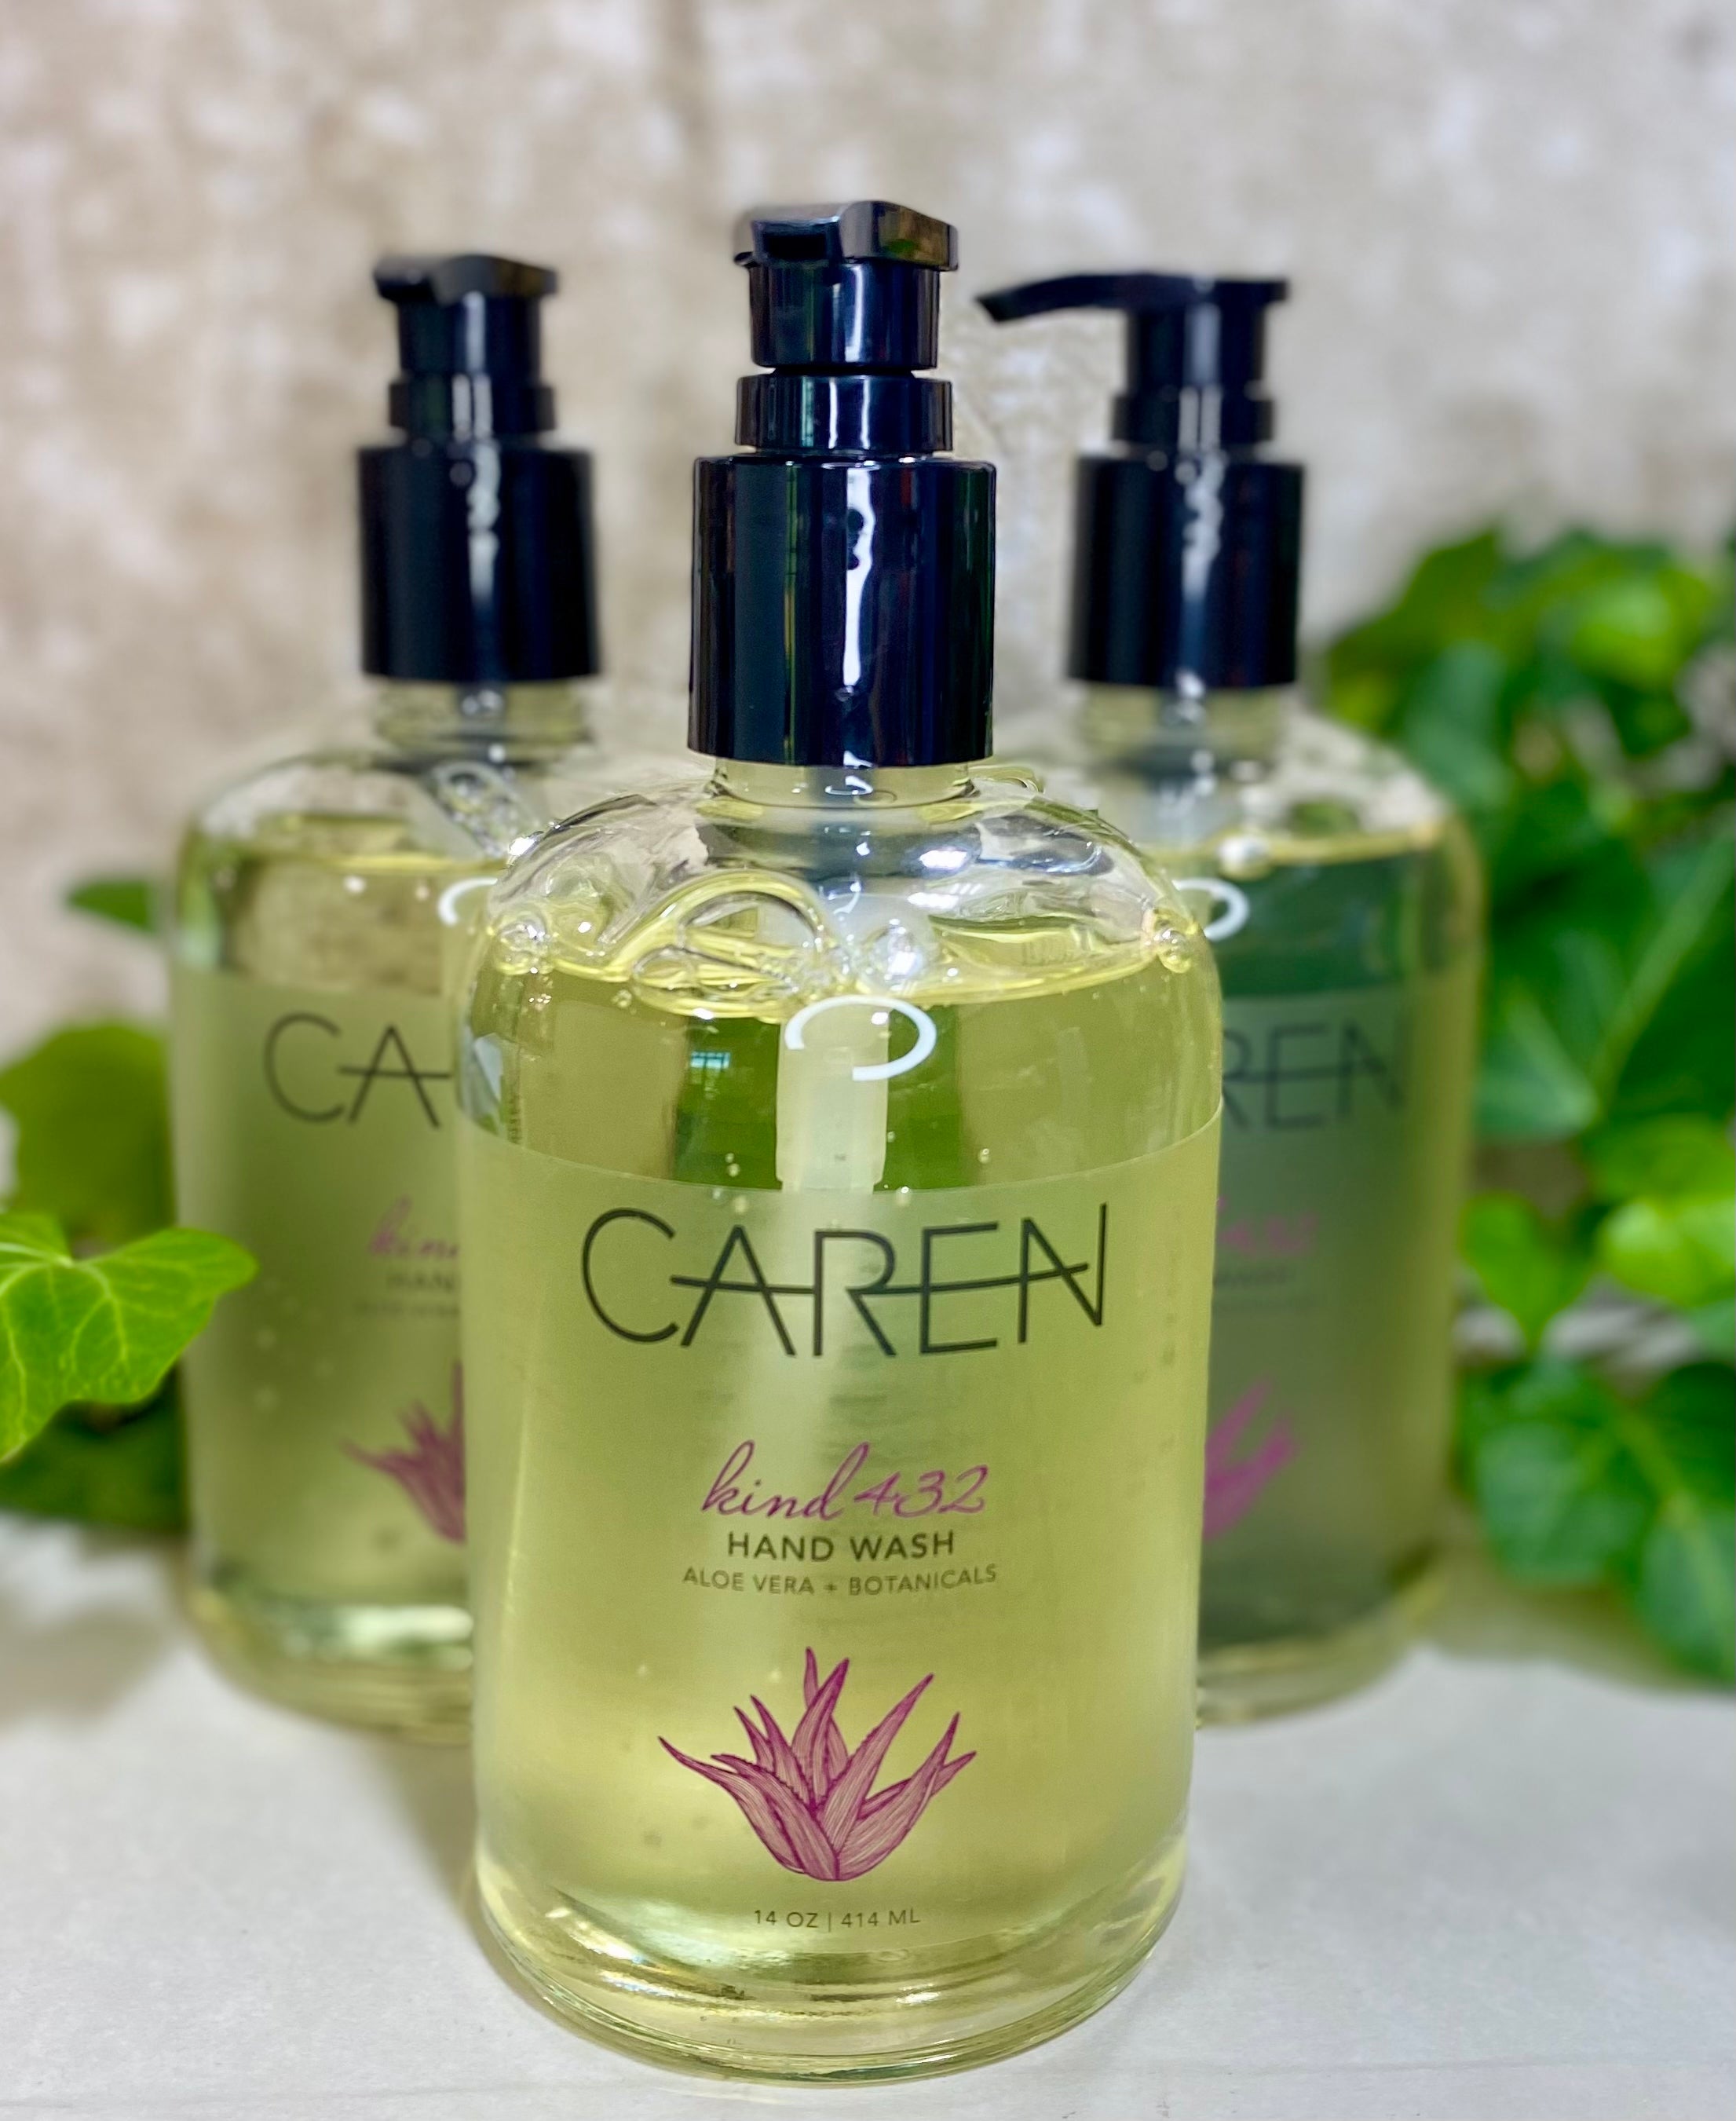 Caren ‘kind 432’ hand soap